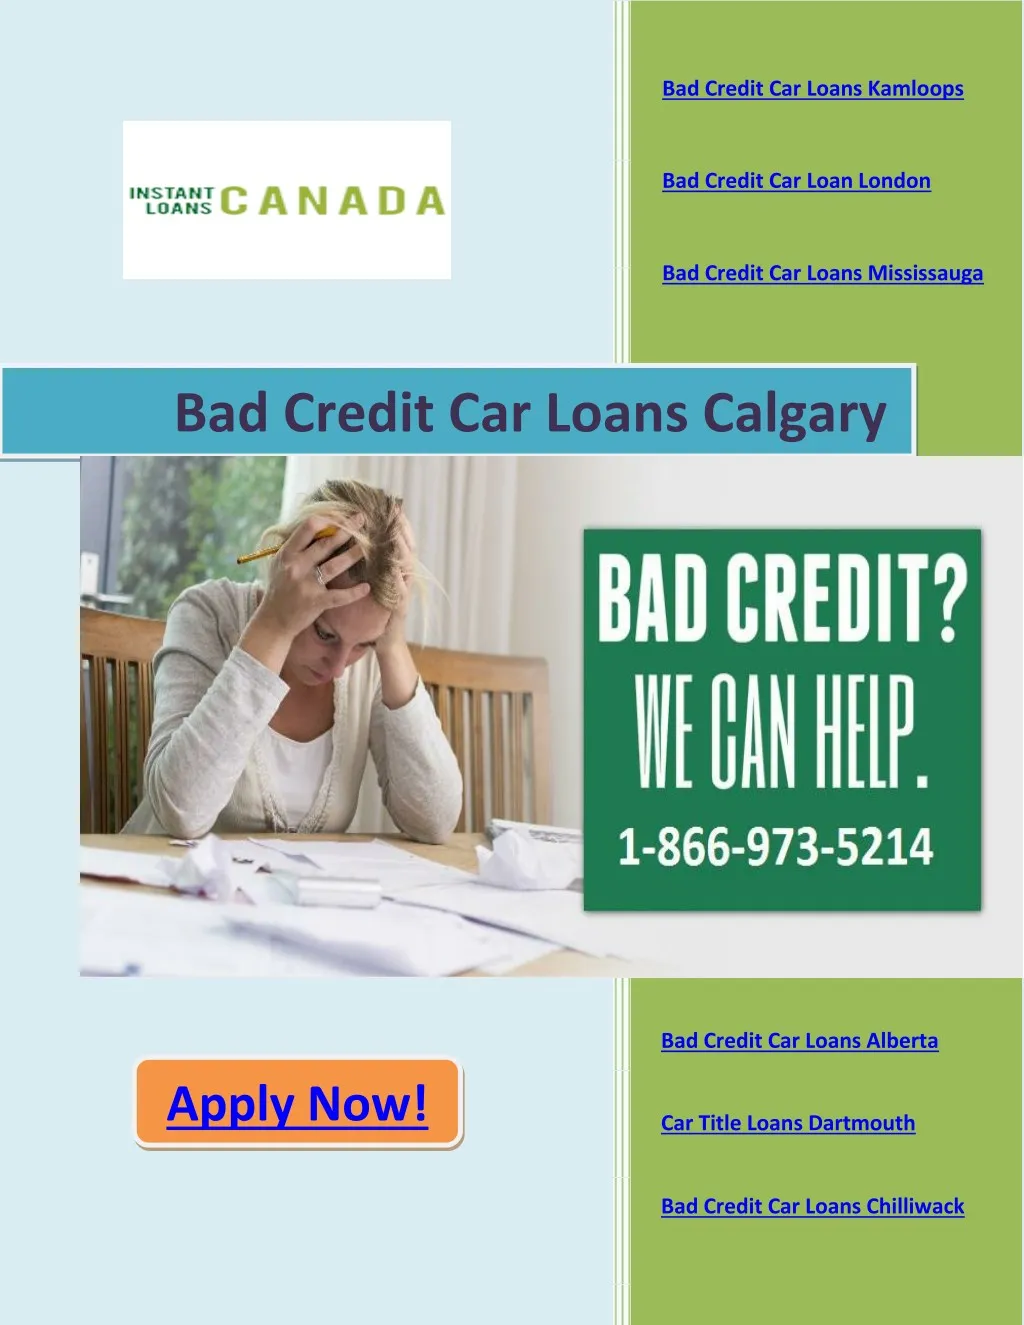 bad credit car loans kamloops